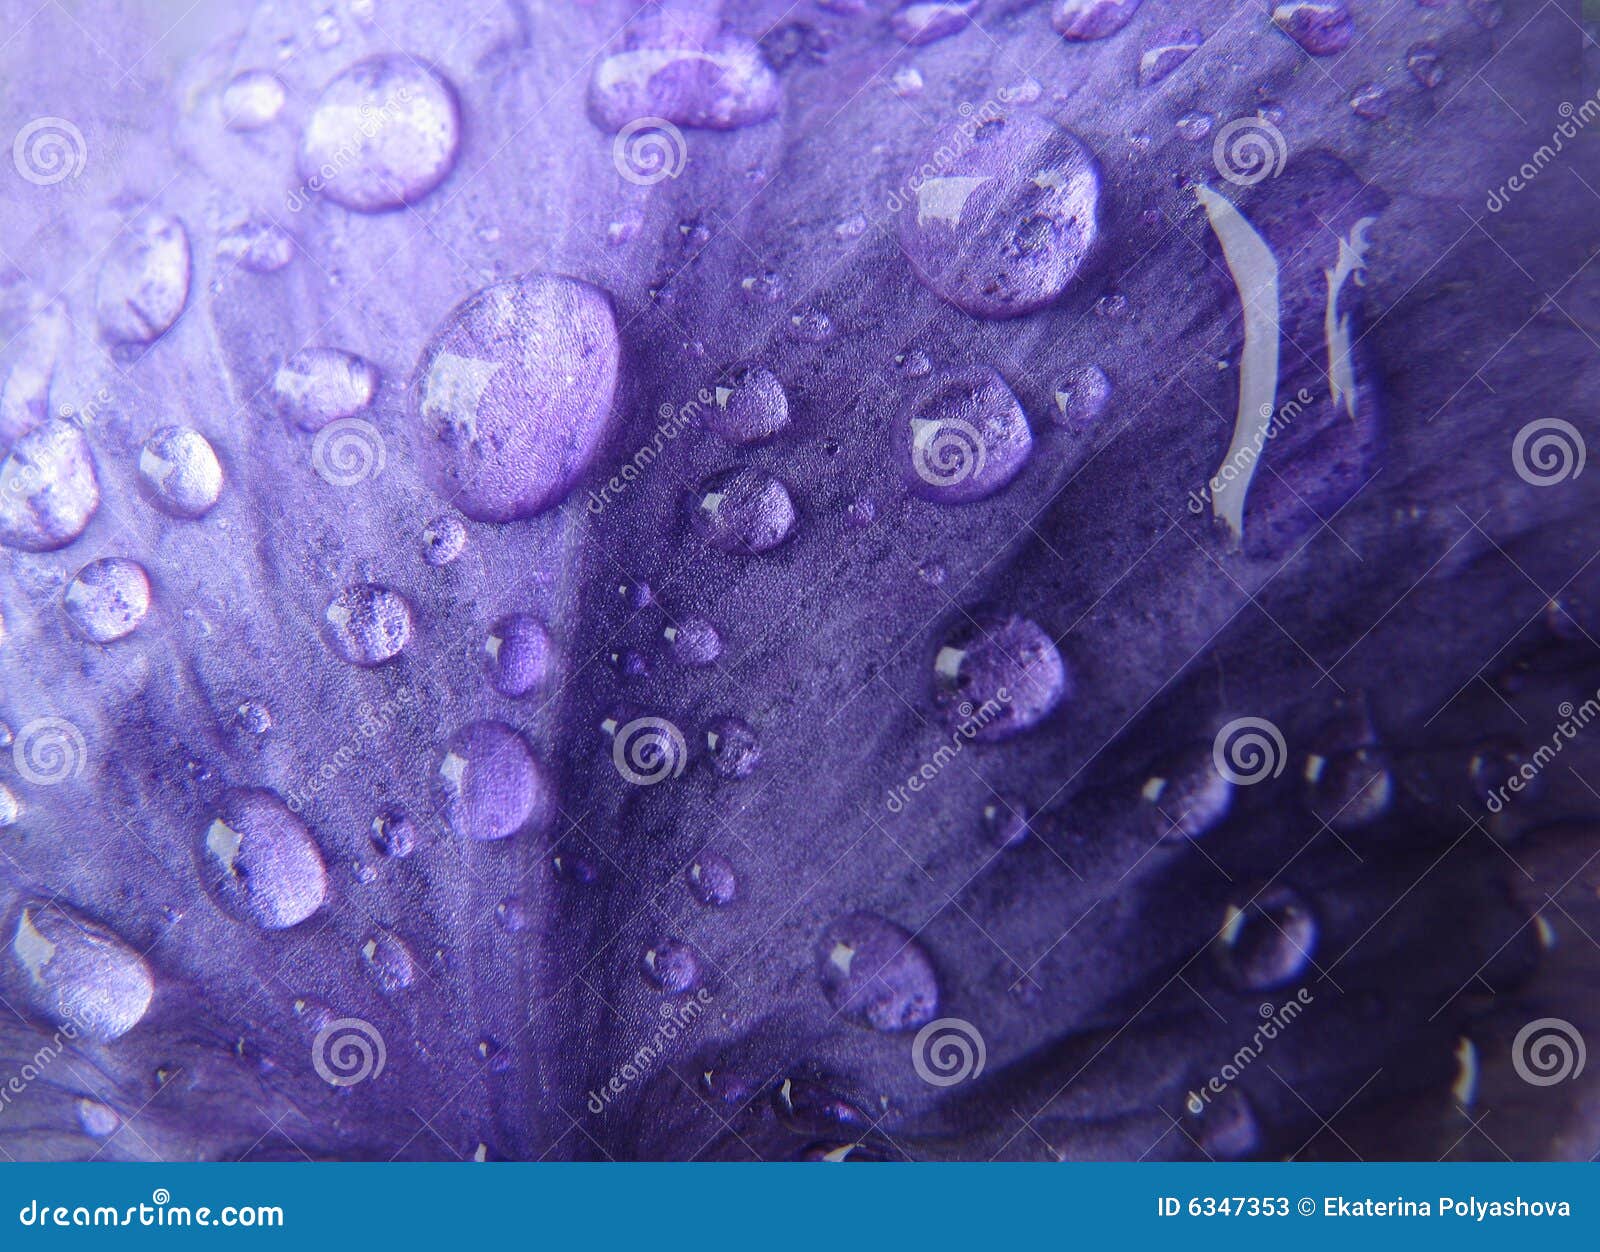 water drops on iris petal